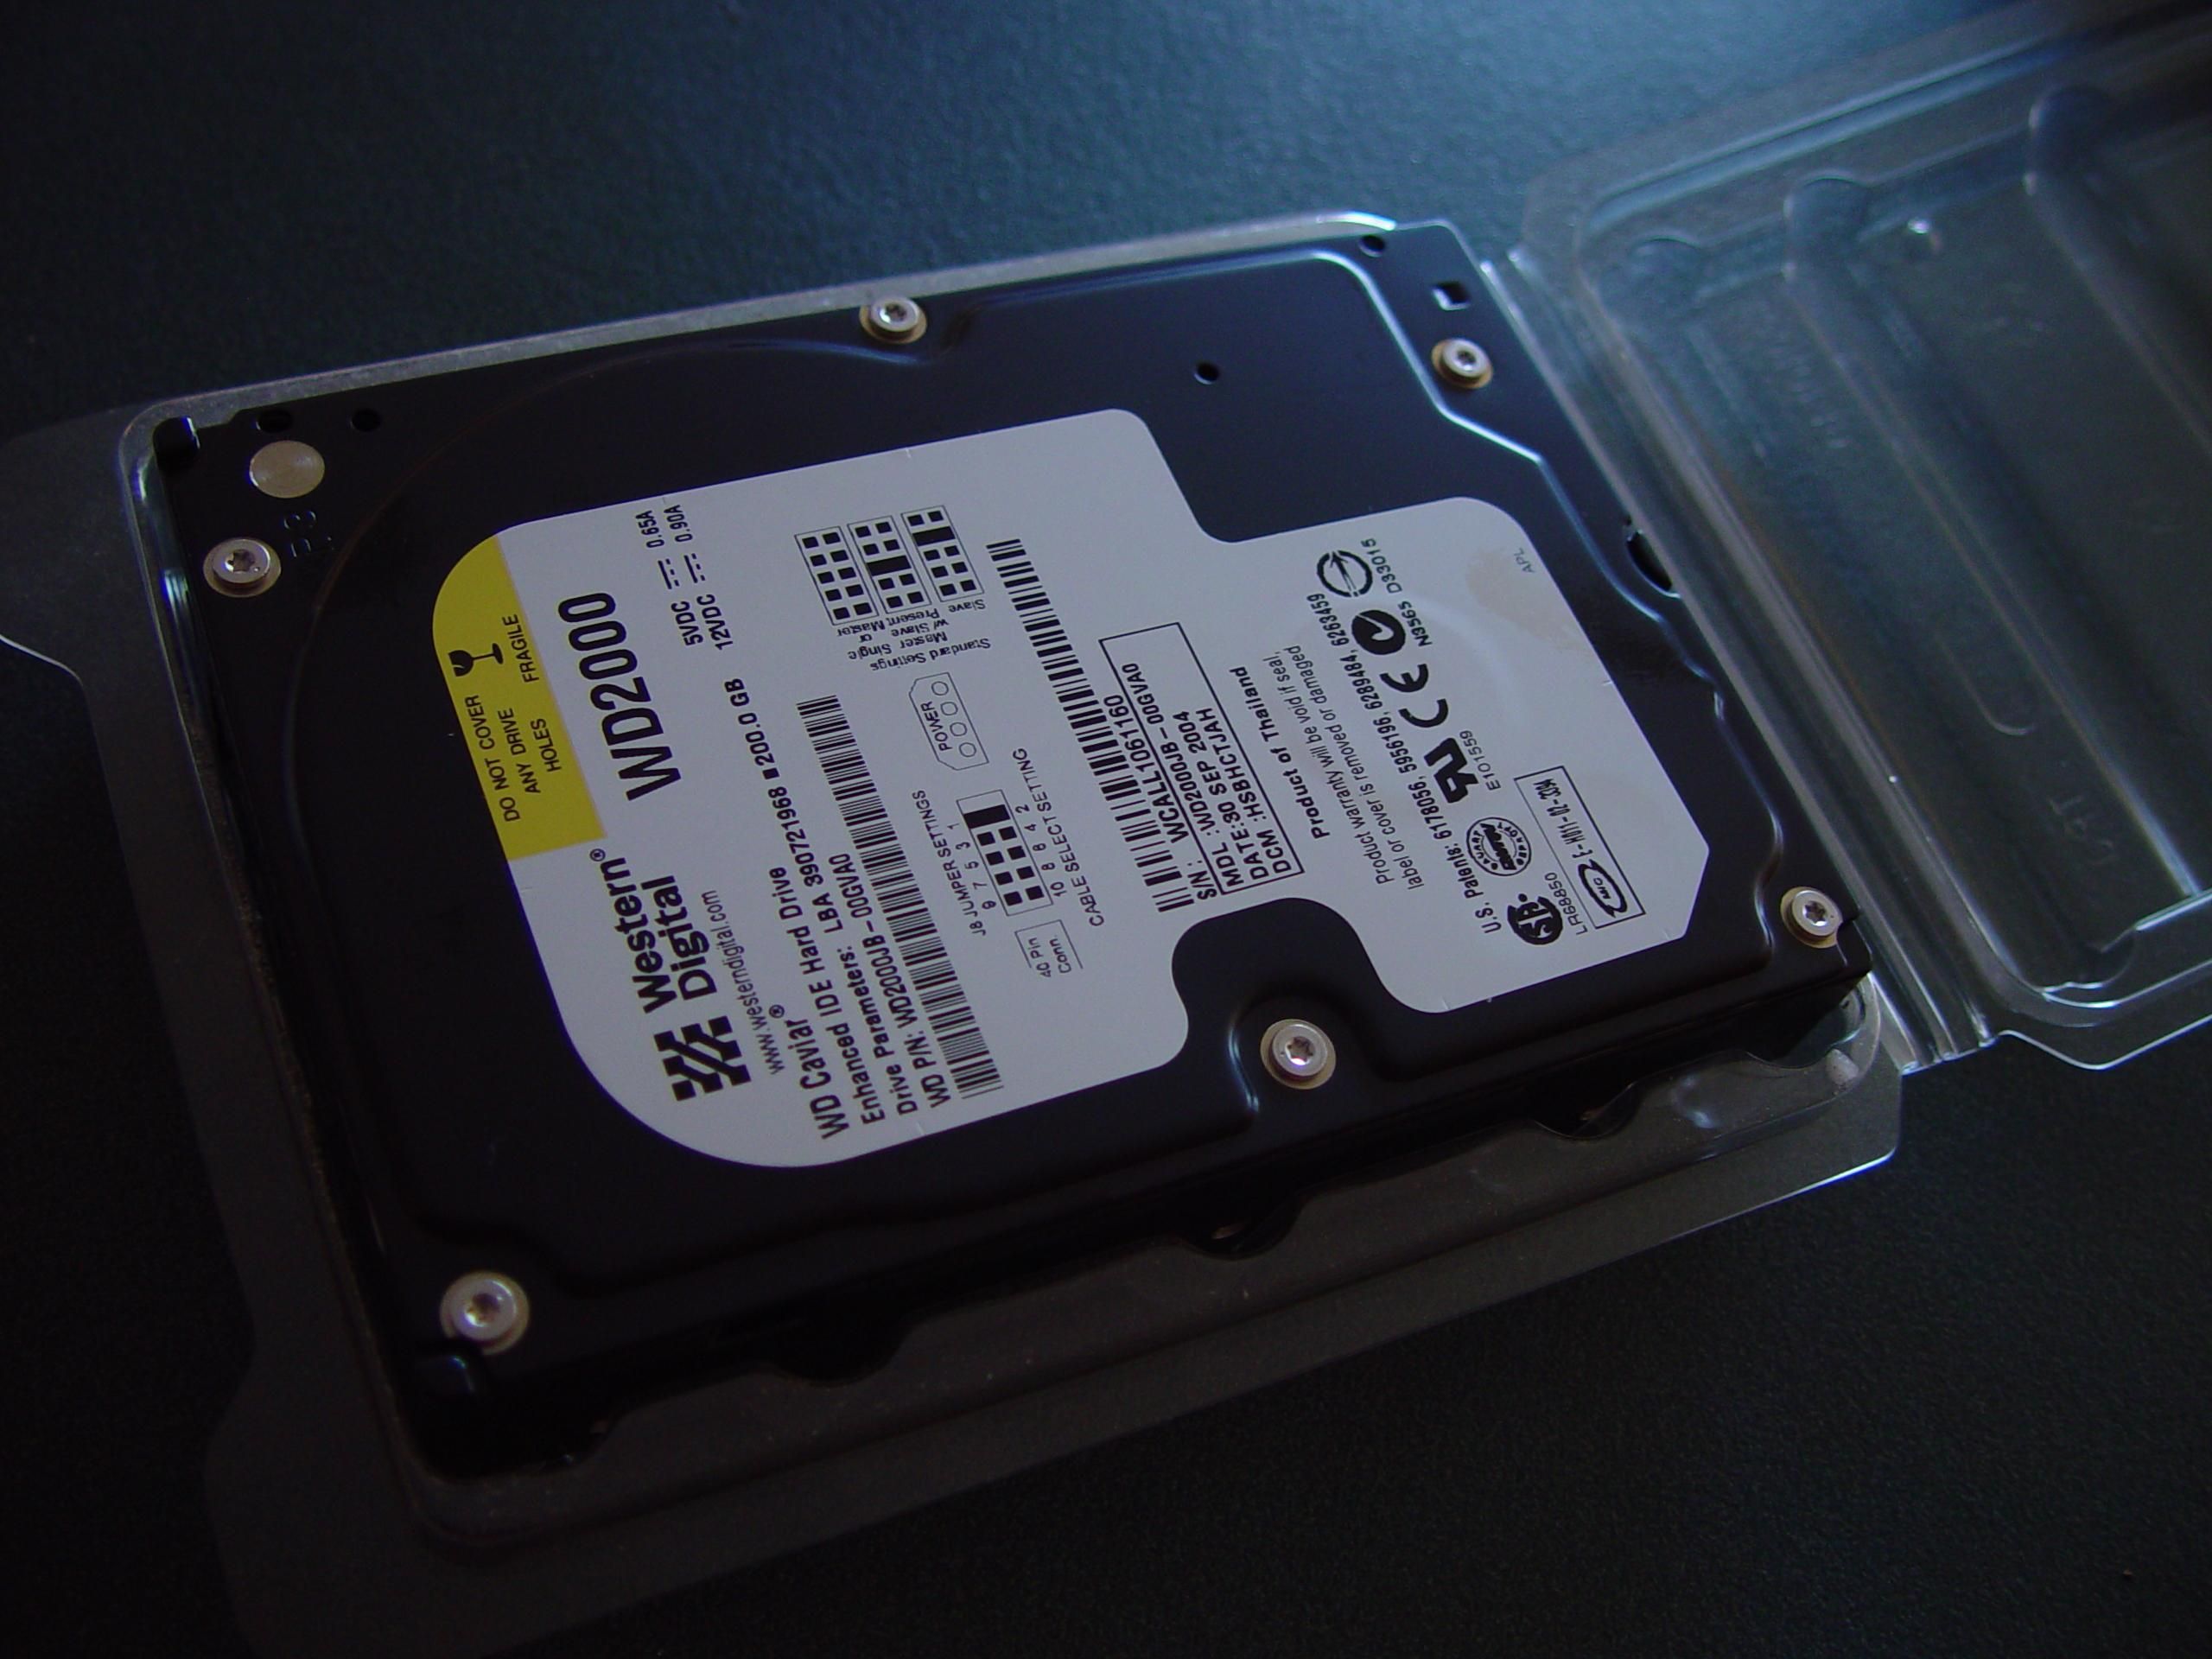 200 gb external hard drive